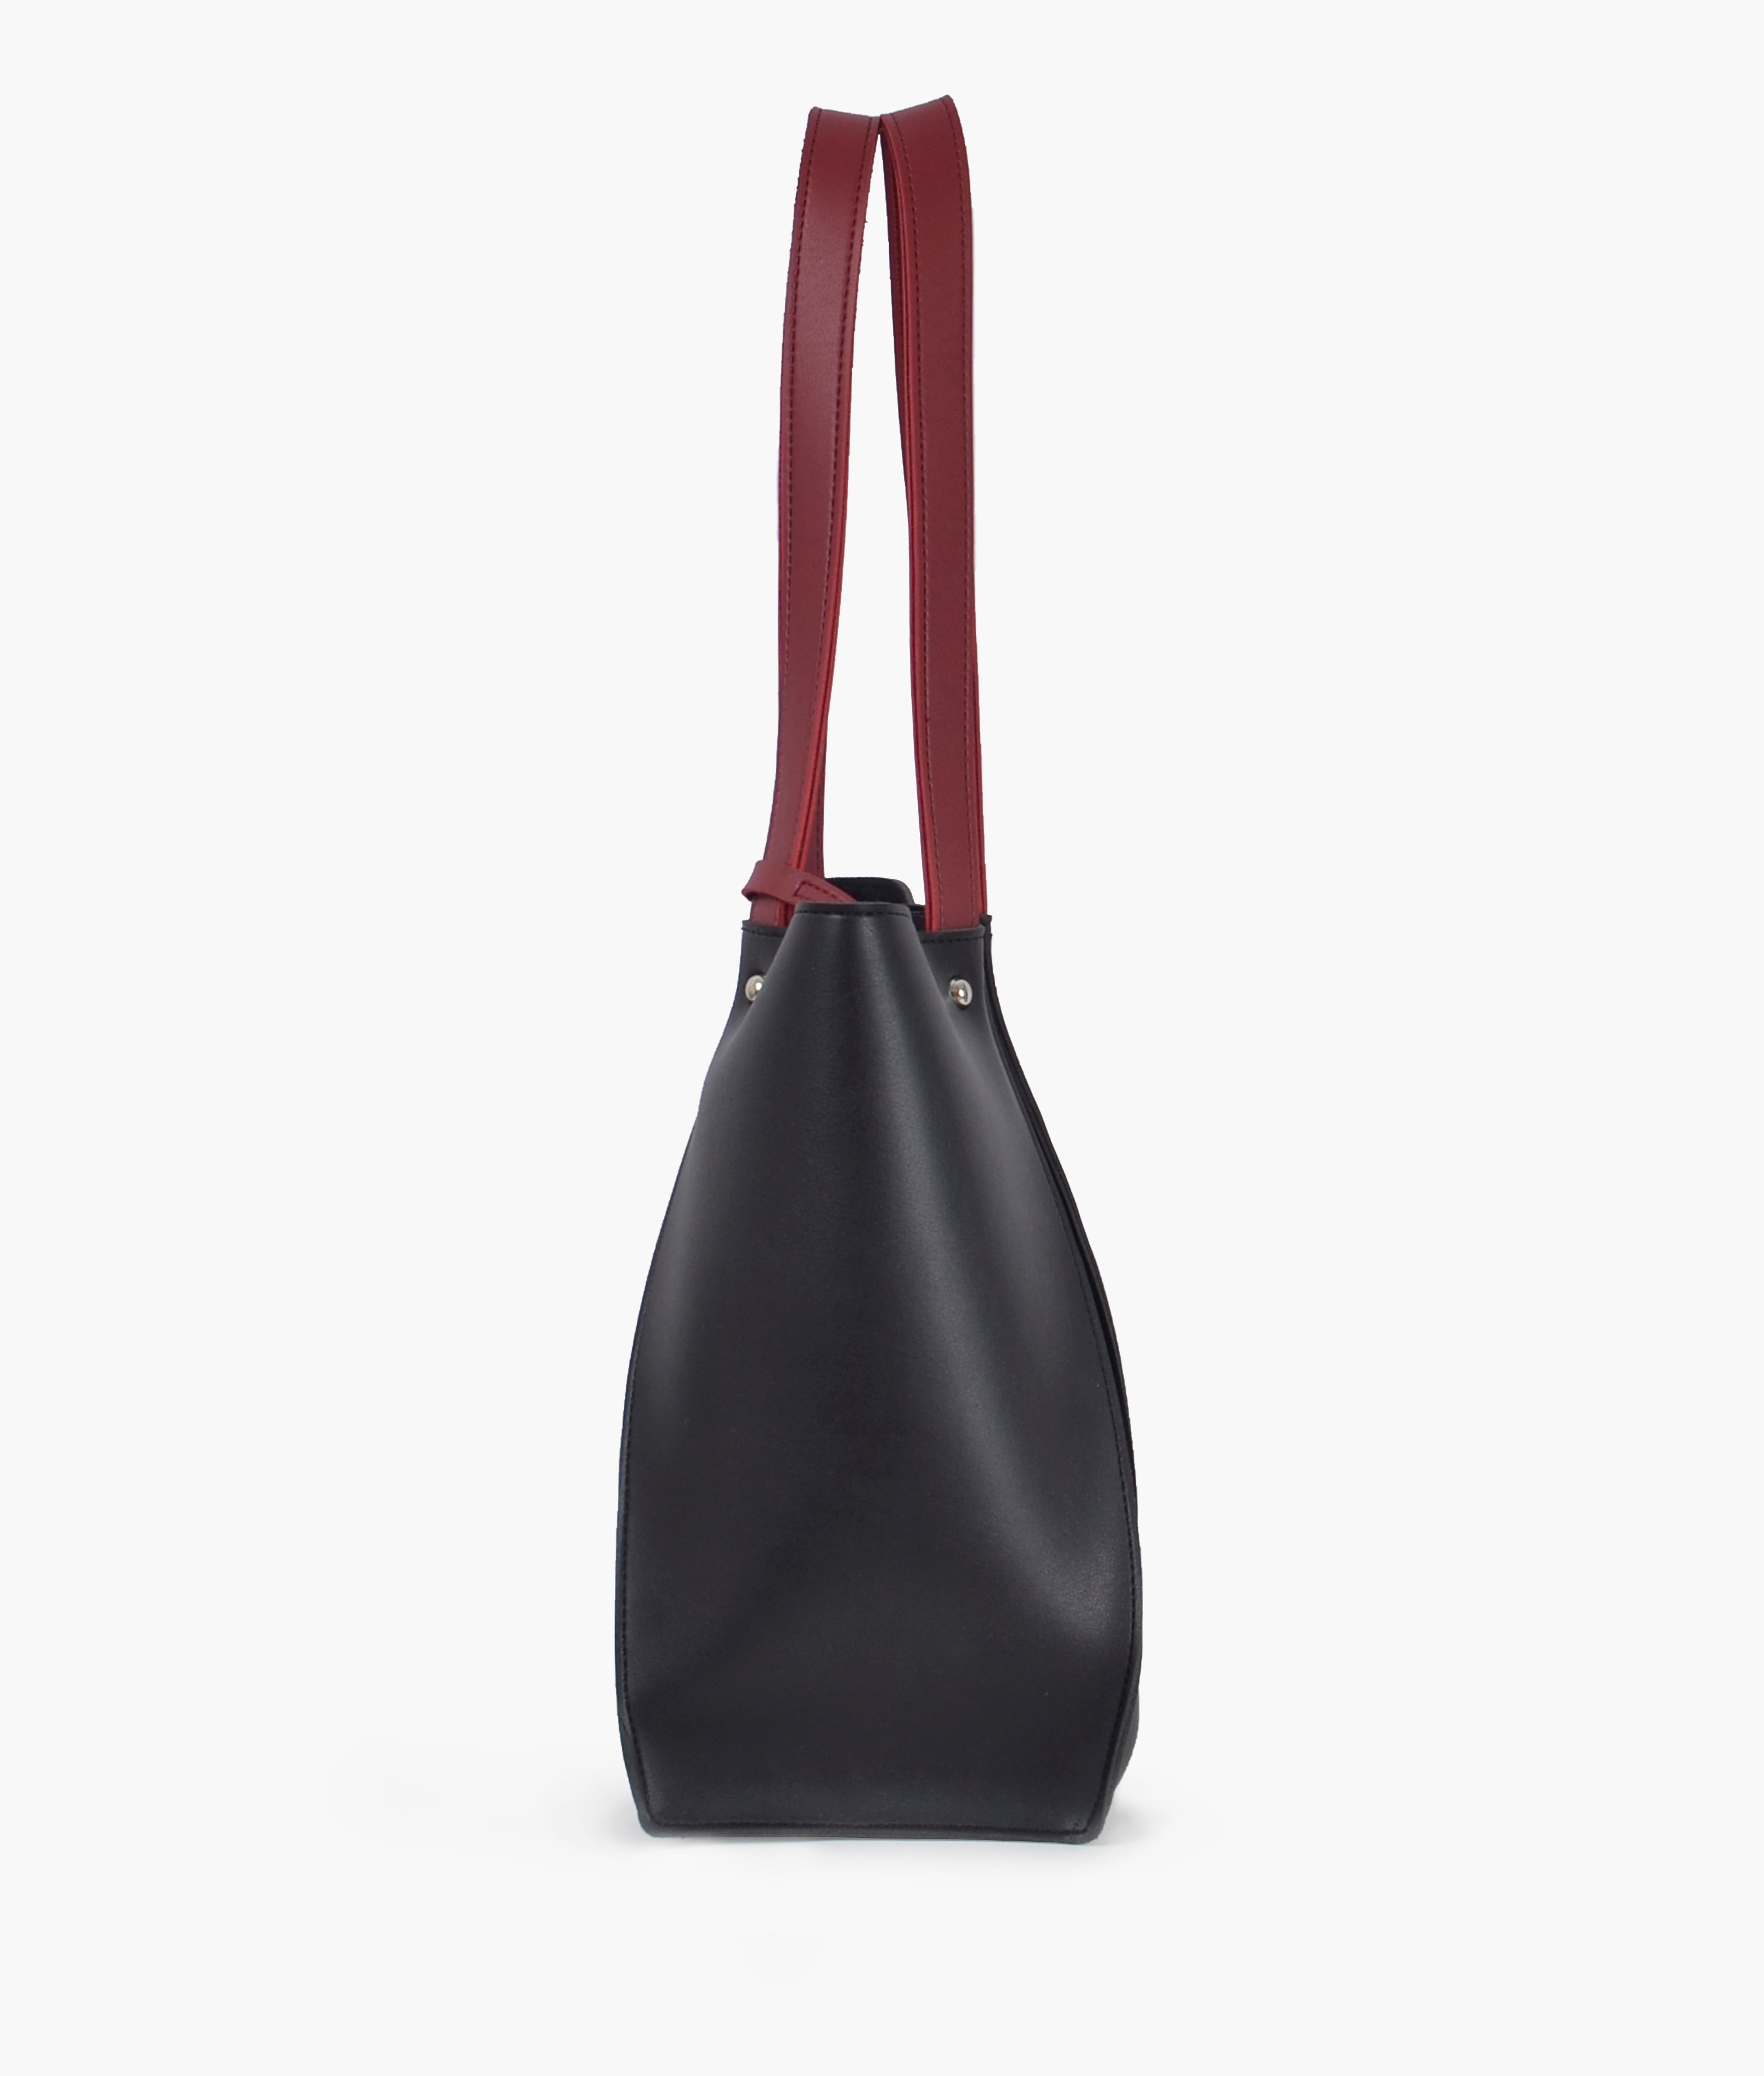 Black shopping tote bag